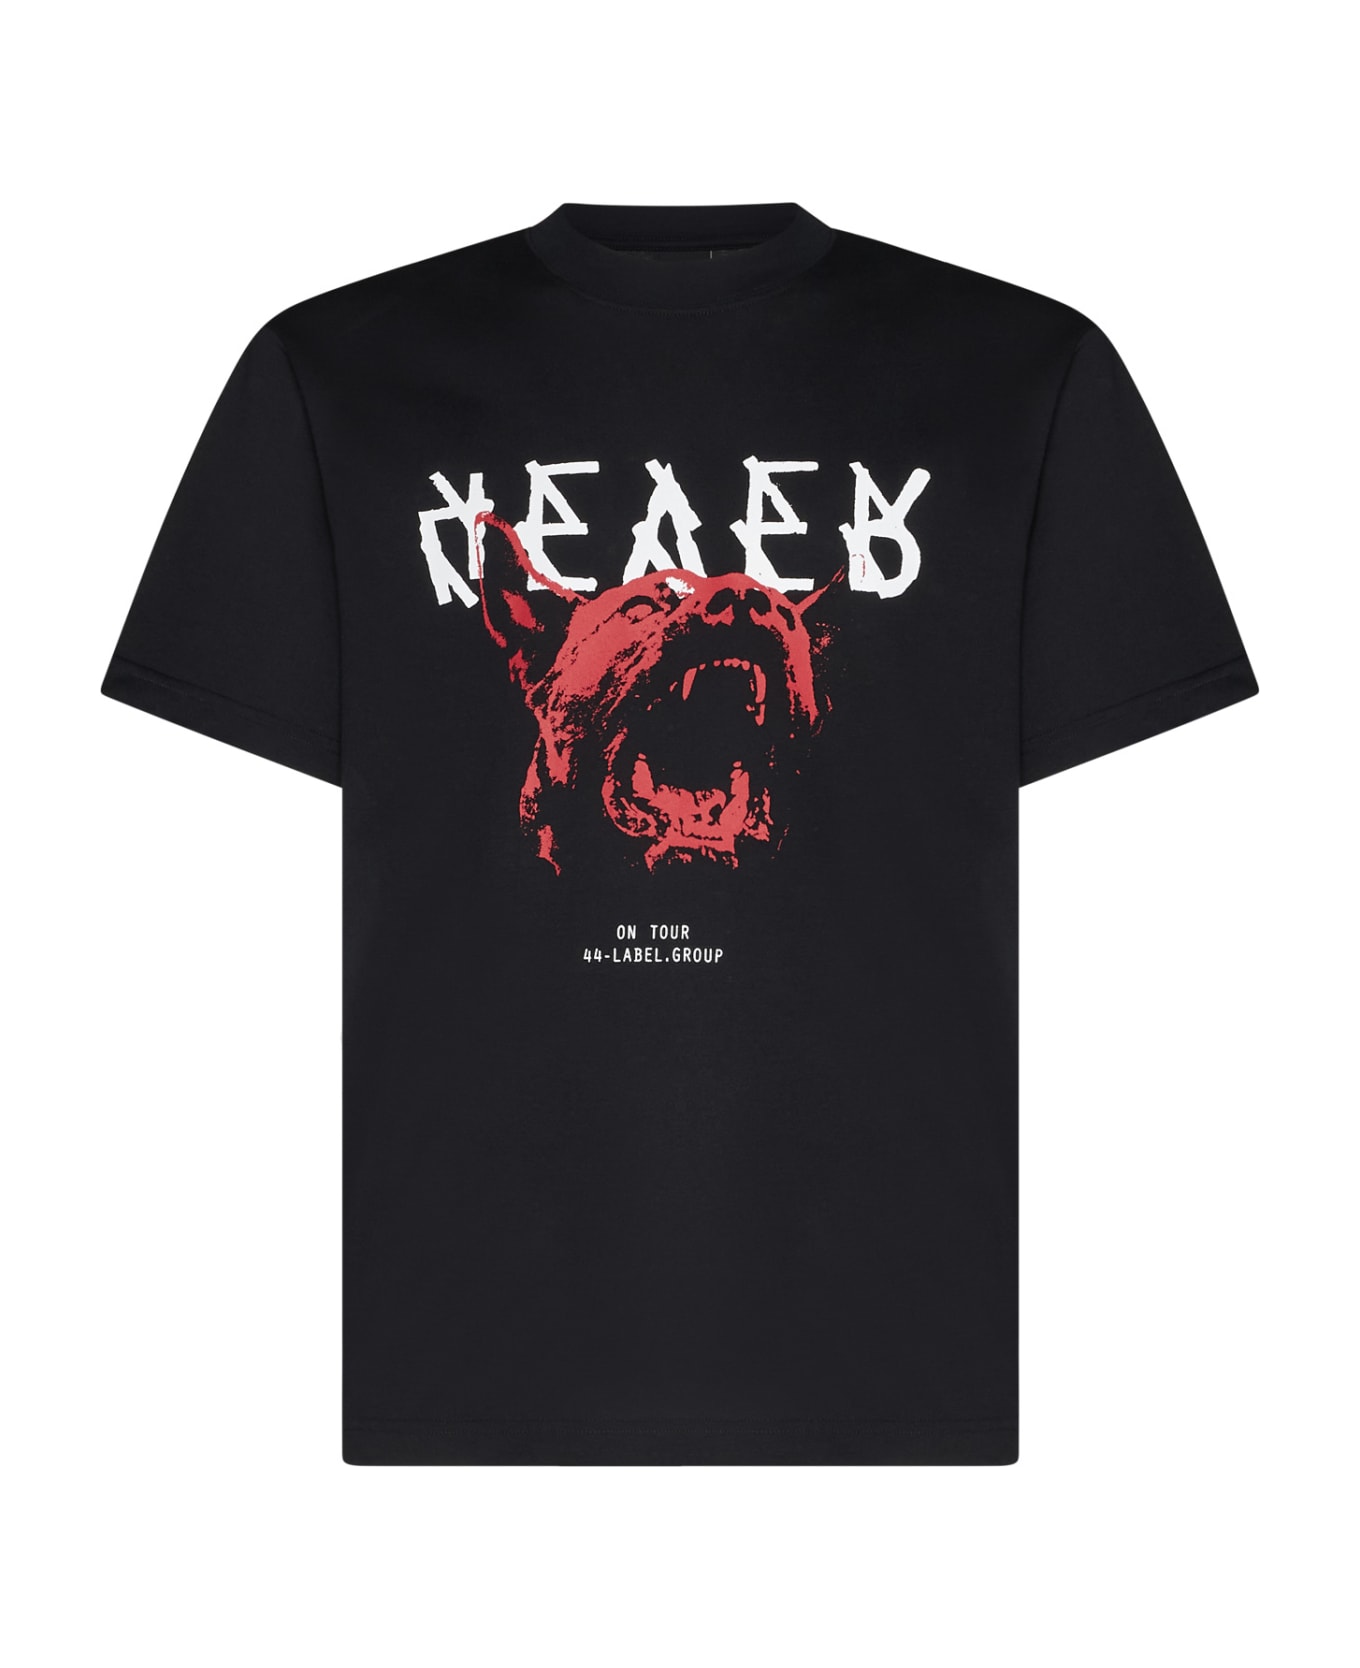 44 Label Group T-Shirt - Black+forever print